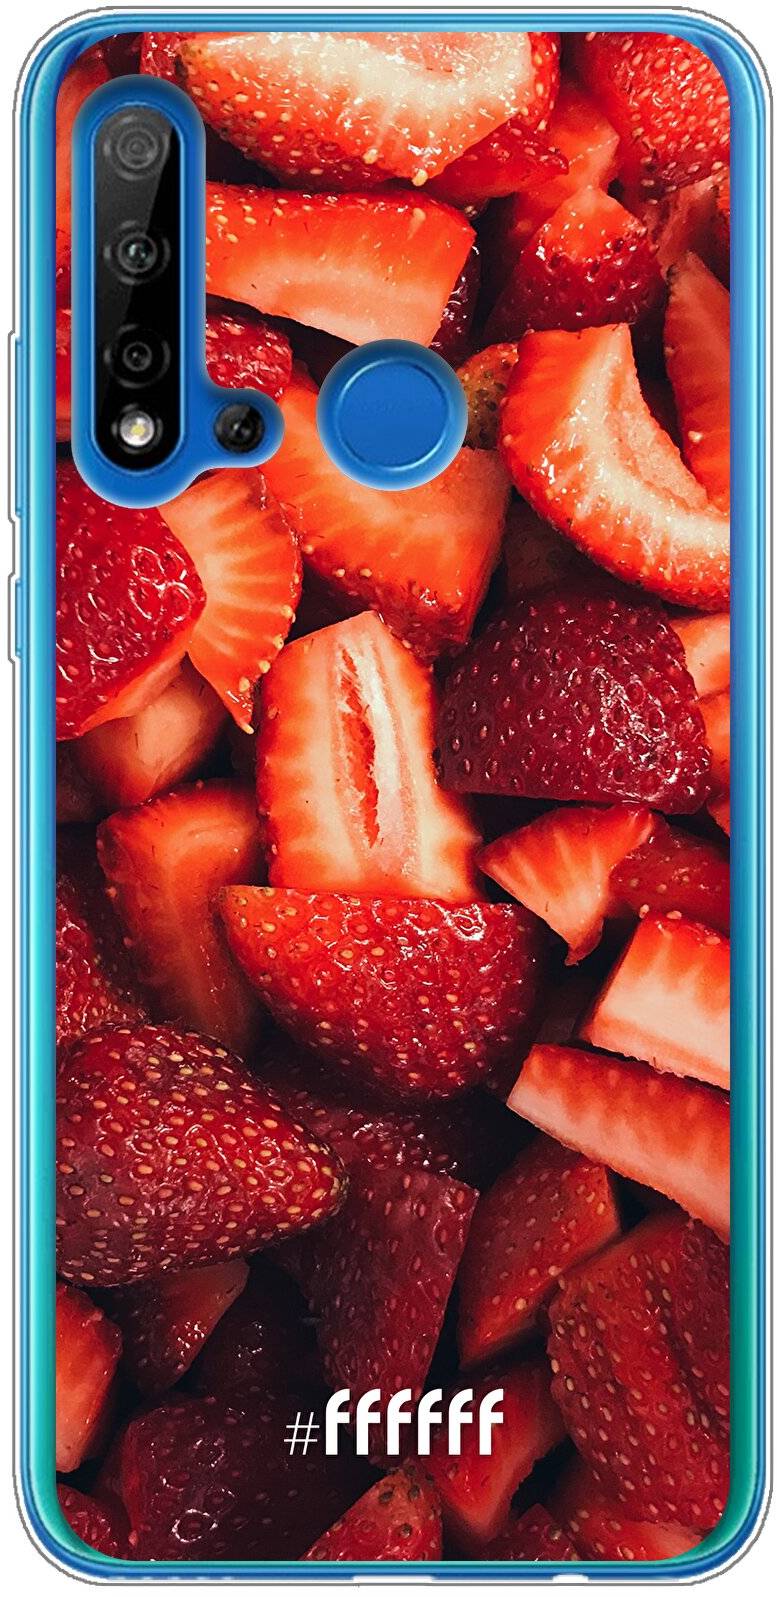 Strawberry Fields P20 Lite (2019)